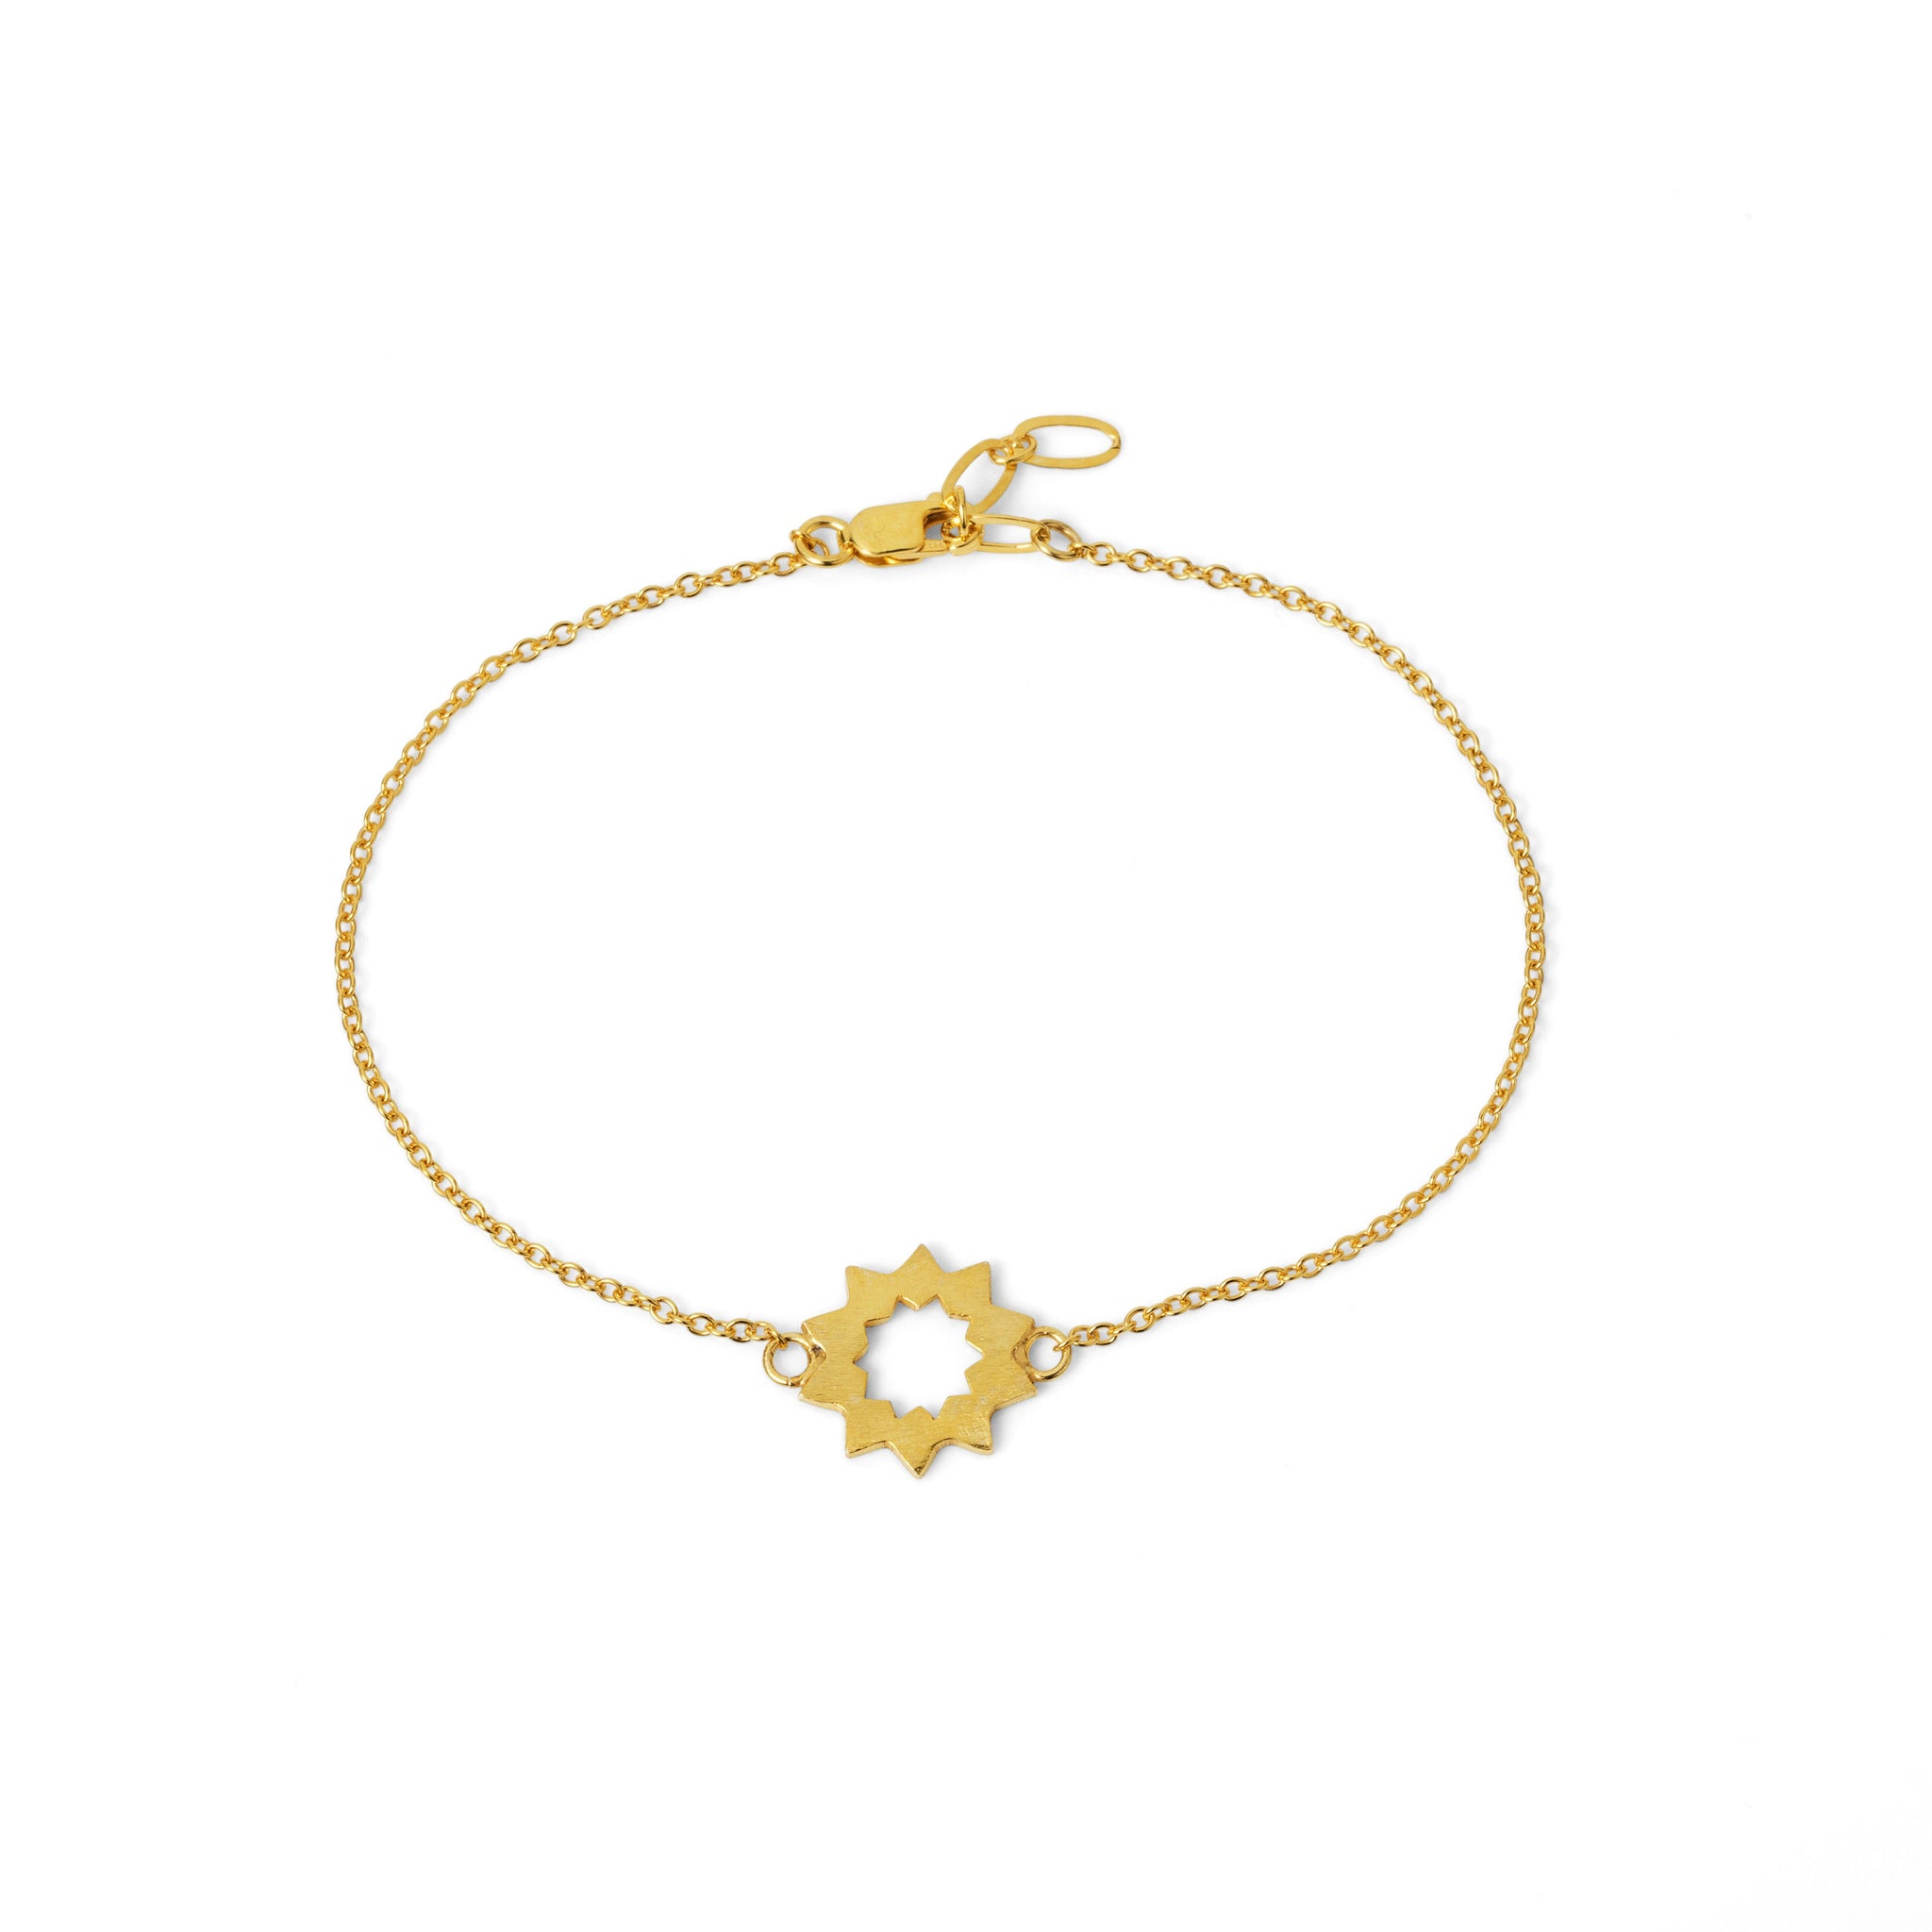 Handmade Afghan Bracelet 24k Gold Plated Brass Sun Elegant Inspired Jewelry Boho Chic Accessories Gift for Her